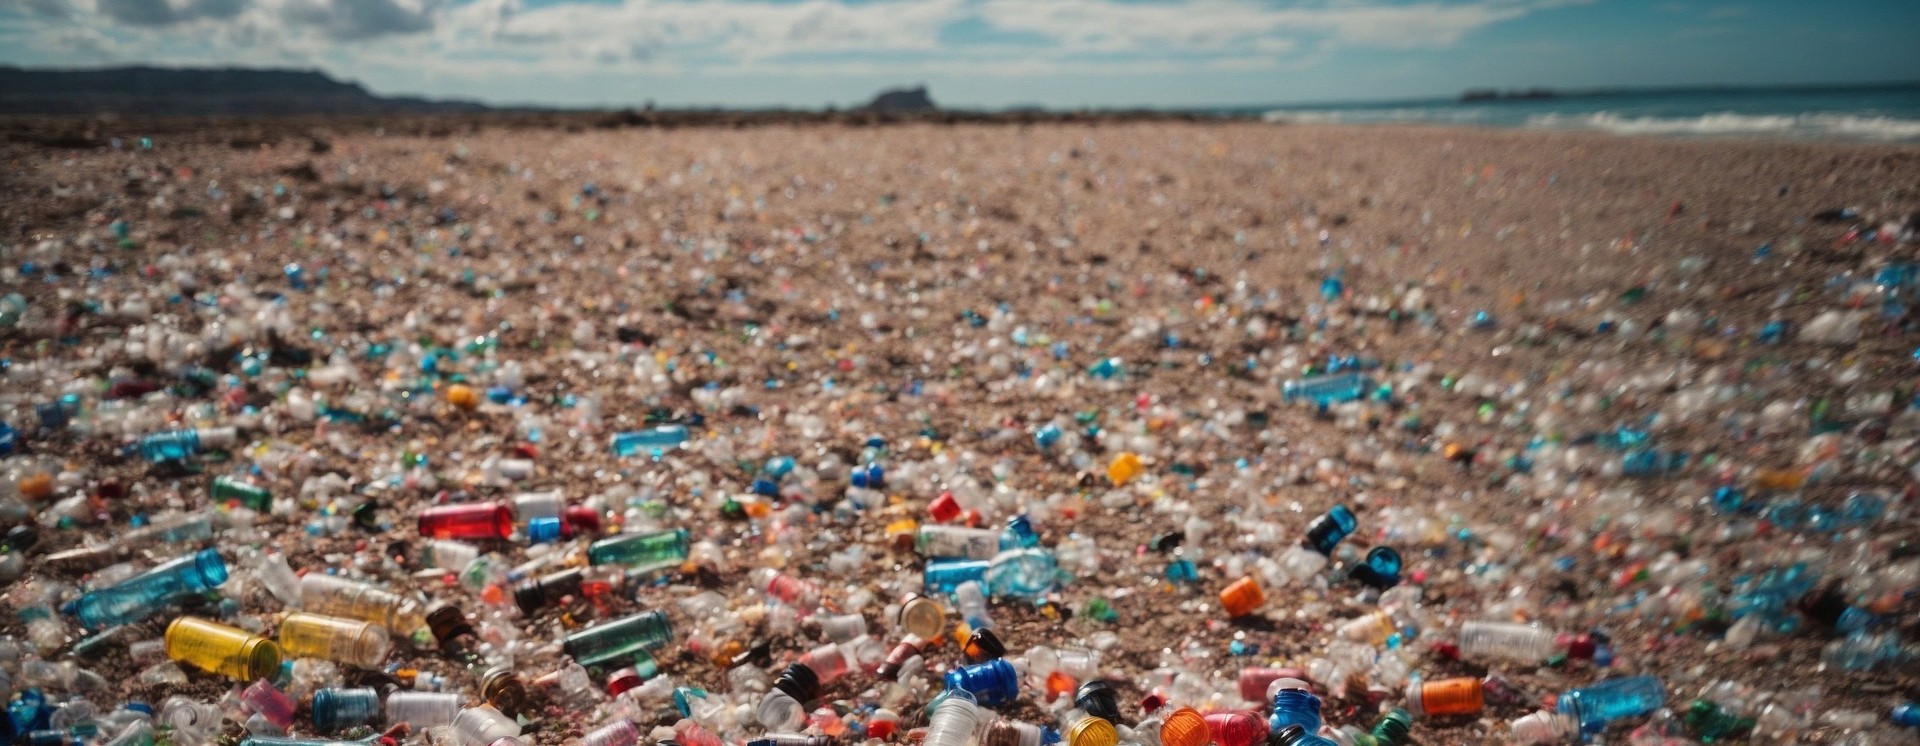 Waste plastic bottles across a beach